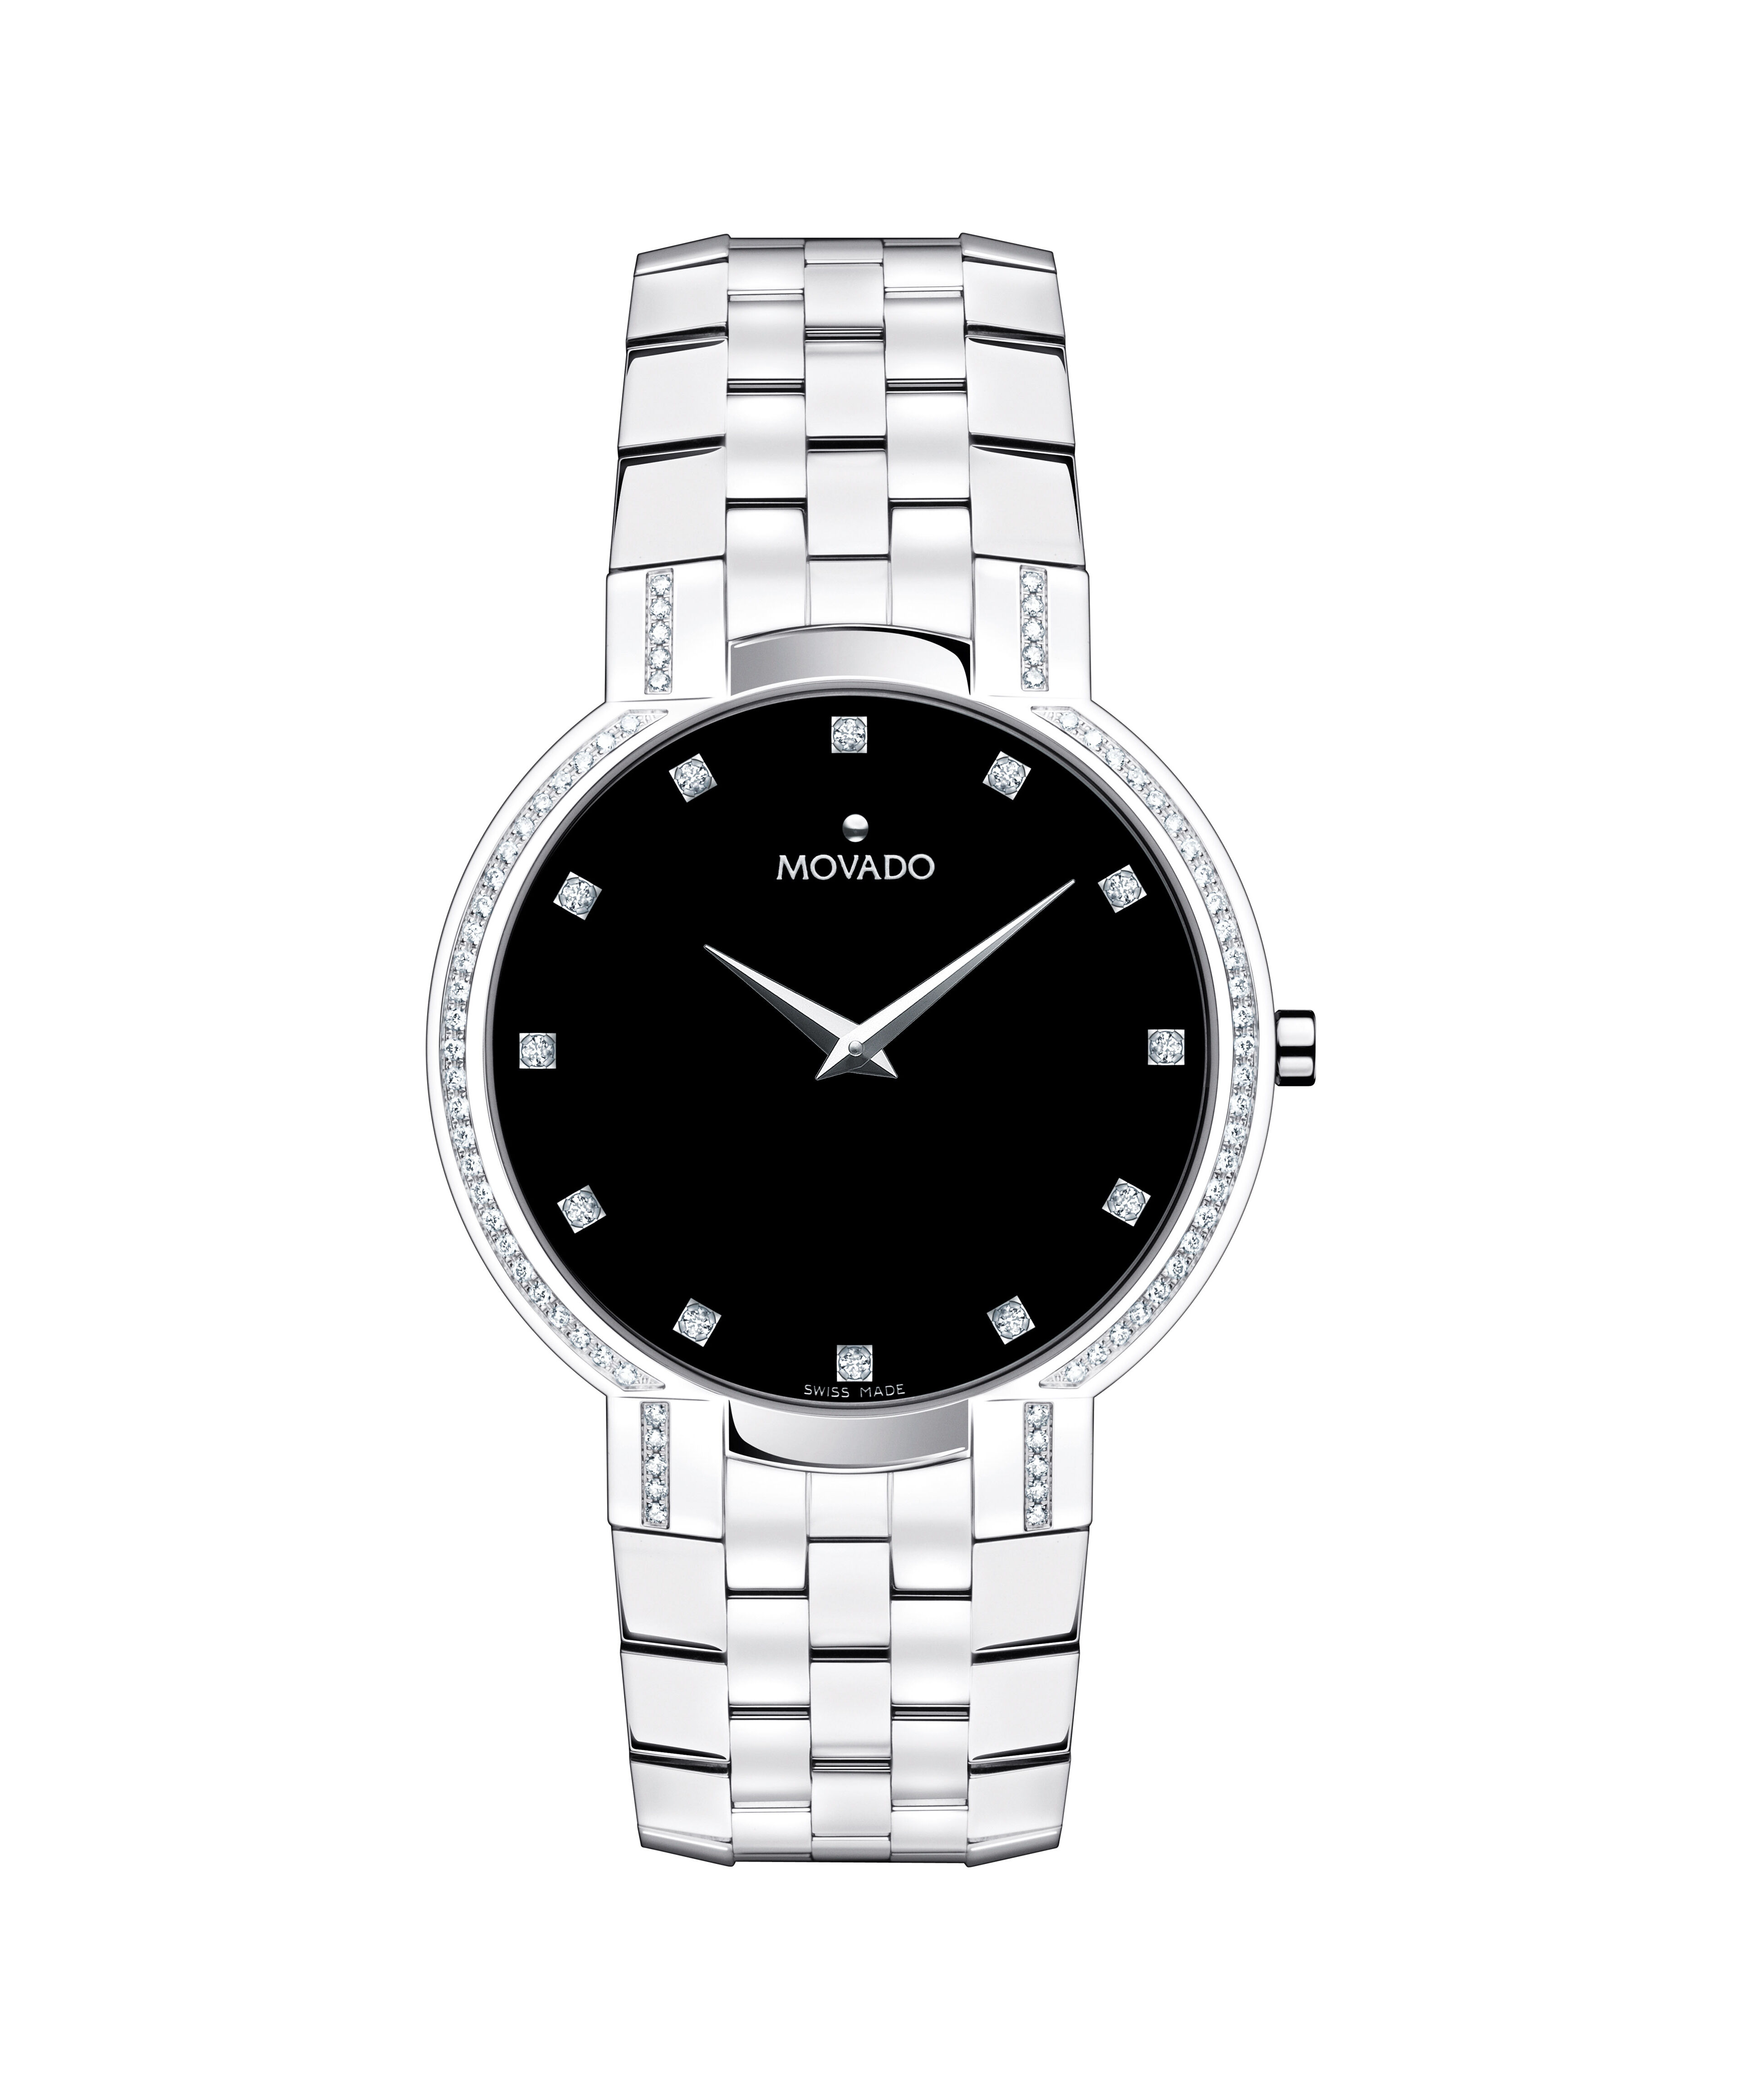 Rolex Replica Exployer 2 1655 Watch